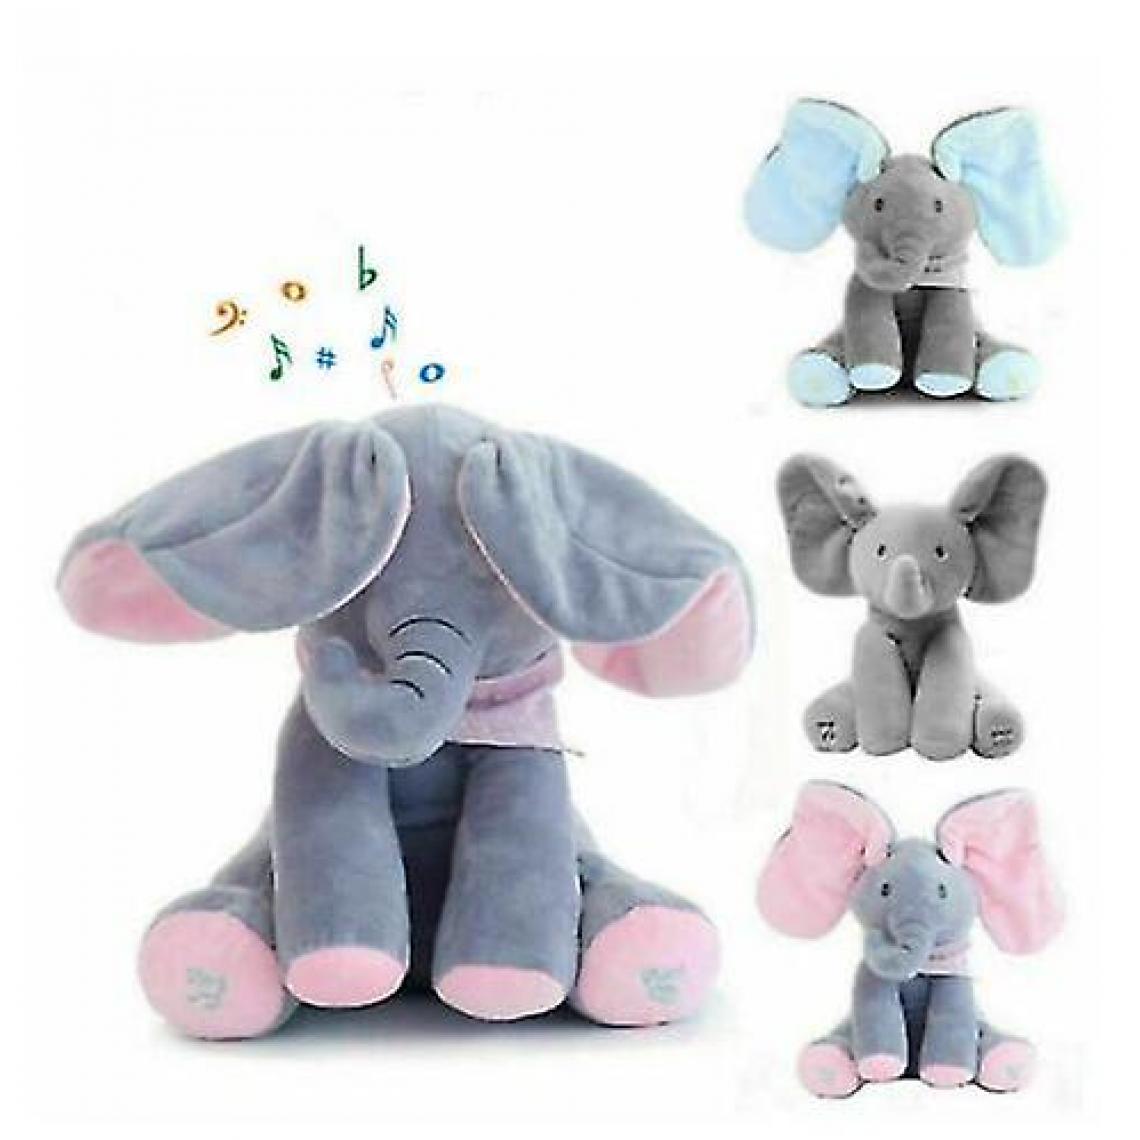 Universal - Music Elephant Plush Toy Stuffed Singing Doll Baby Kids Gift(Gray) - Animaux